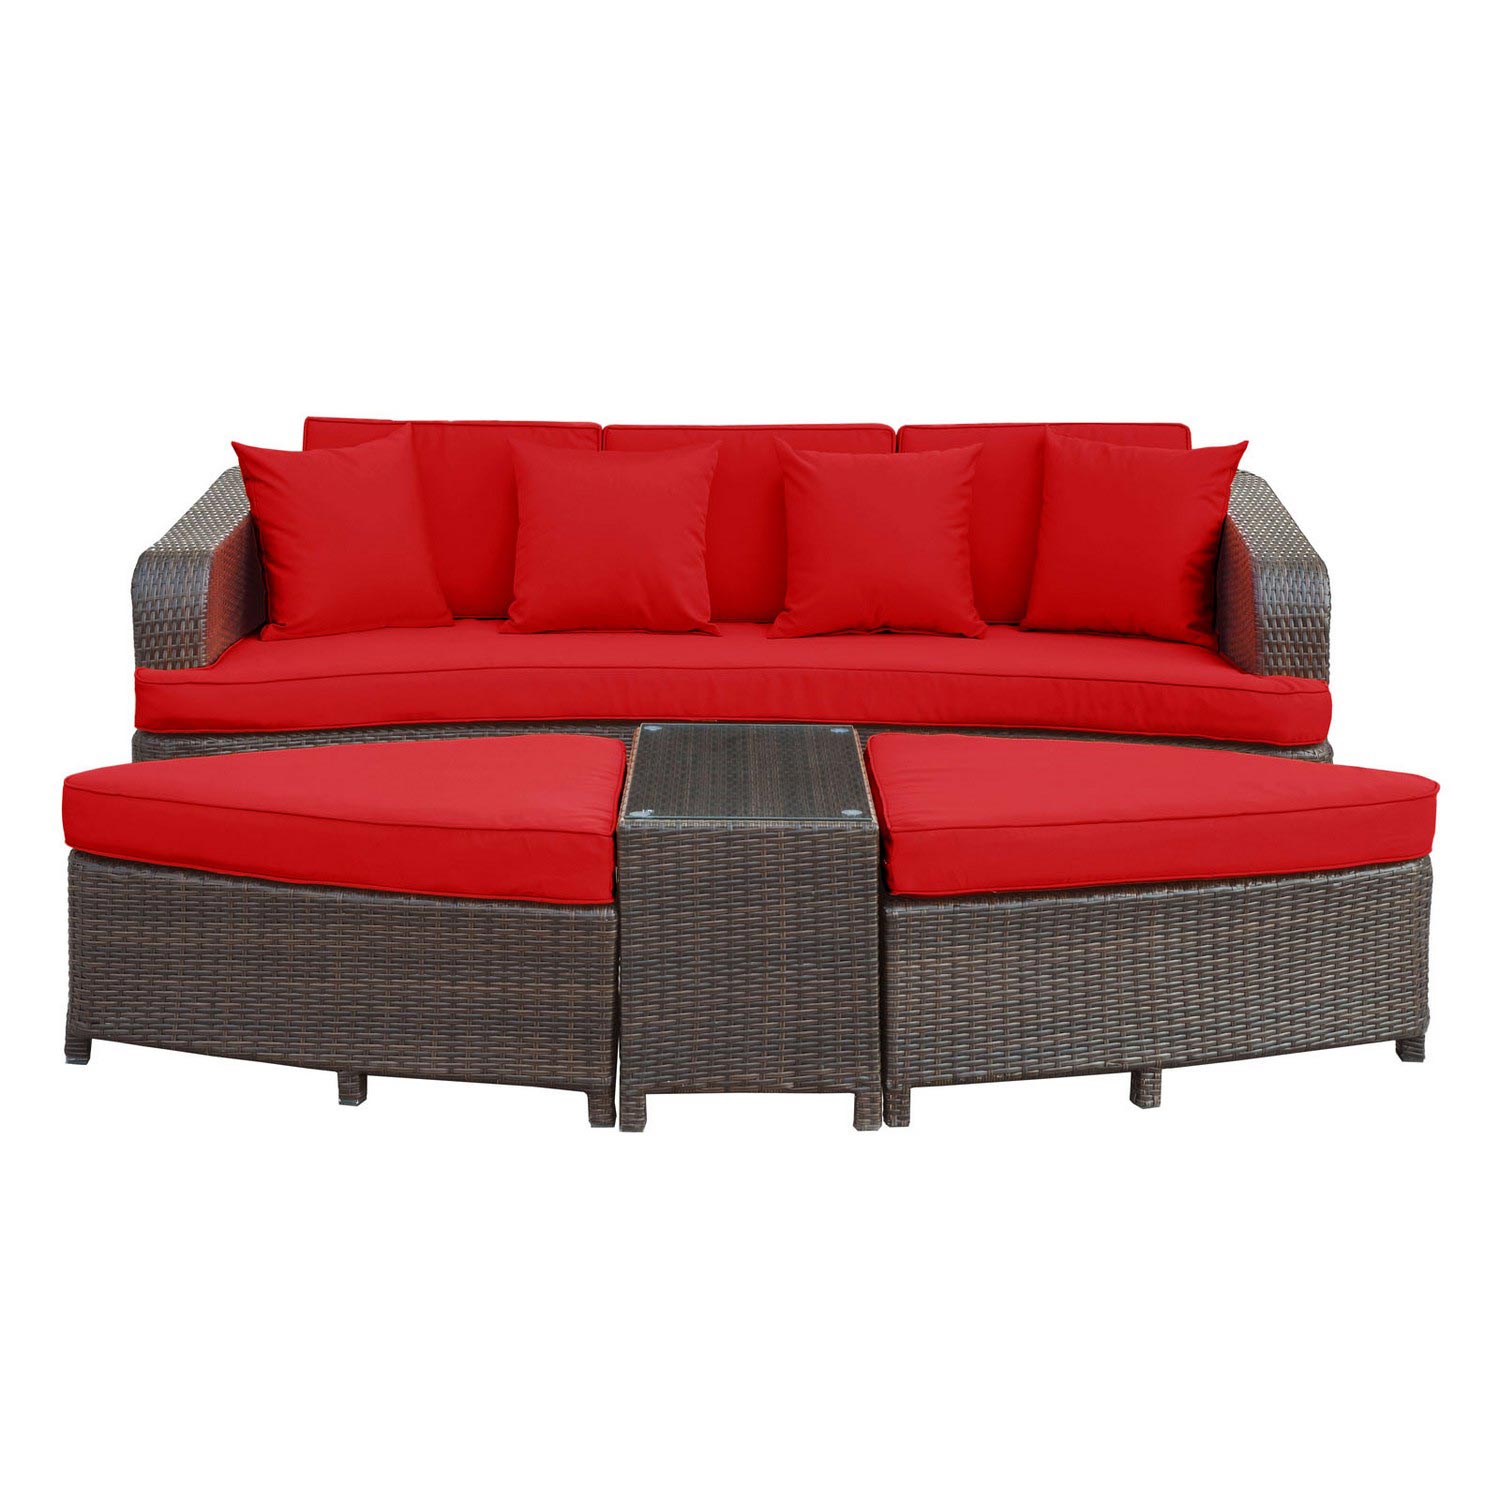 Modway Monterey 4 Piece Outdoor Patio Sofa Set - Brown/Red